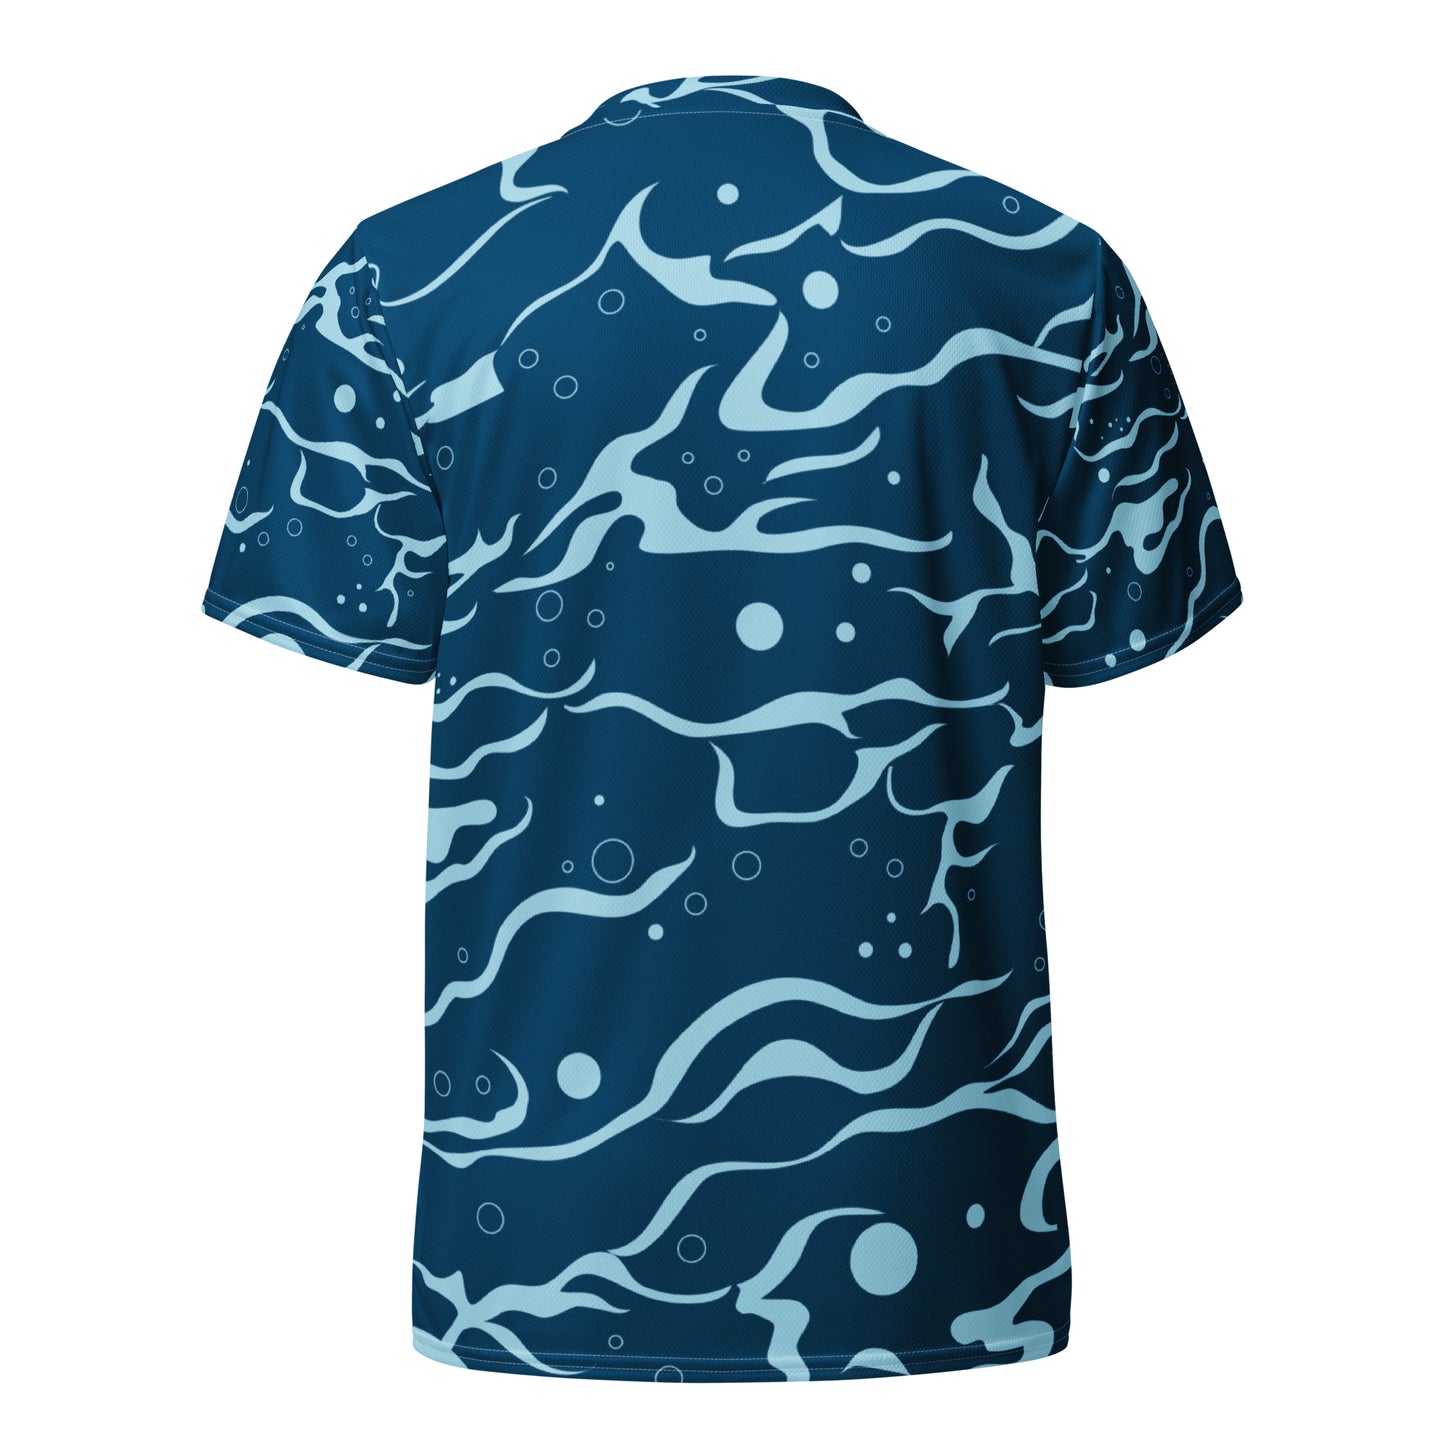 Killer Whale, camiseta de deporte reciclada